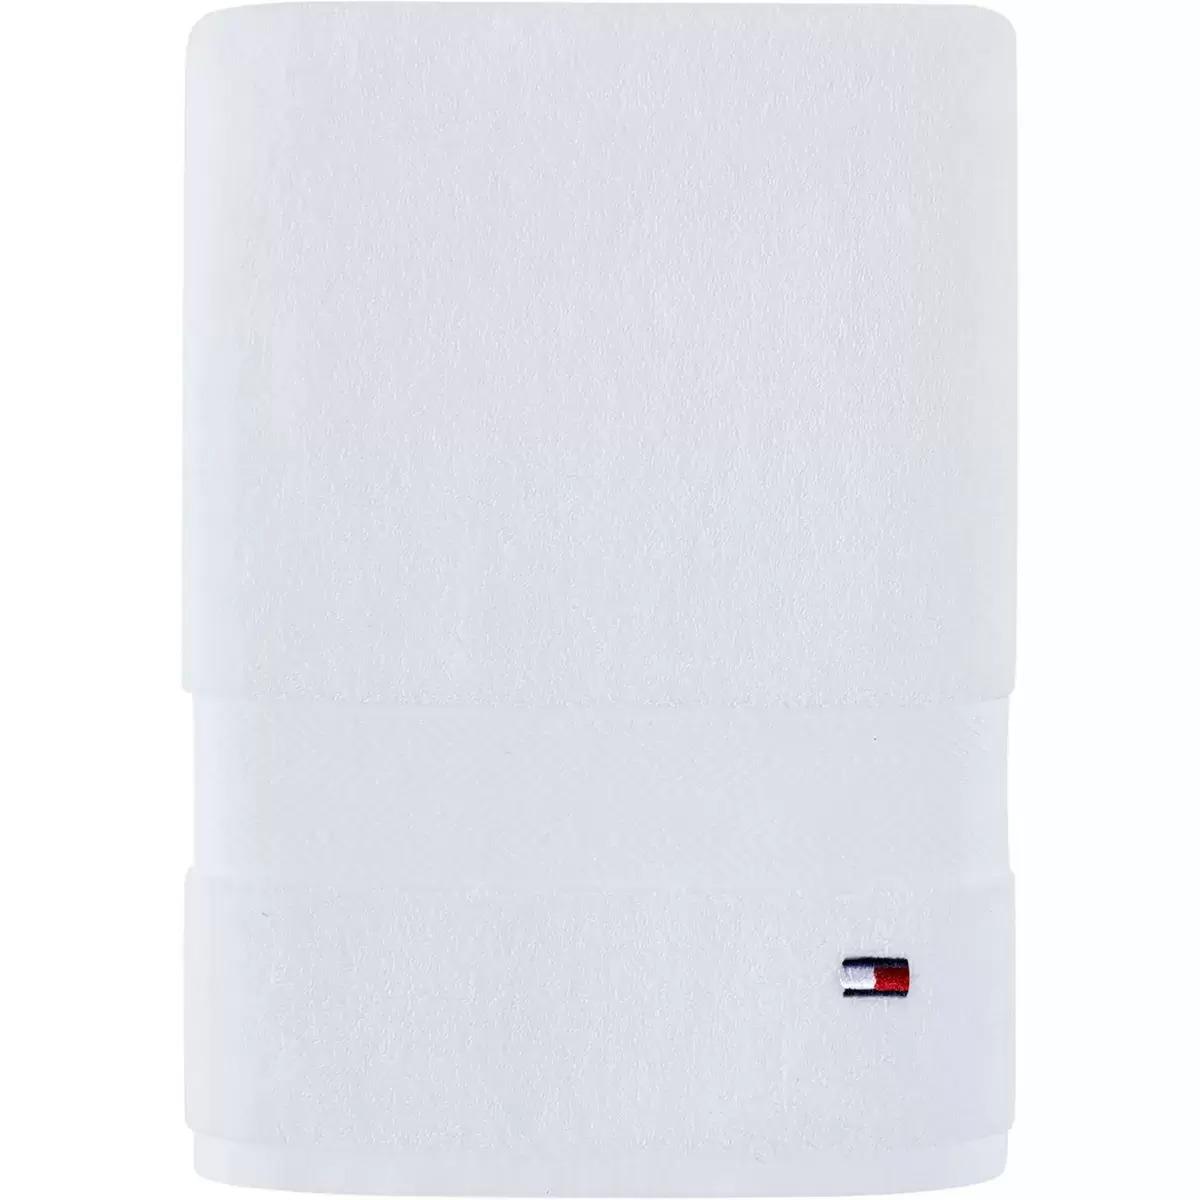 Tommy Hilfiger 30x54 Modern American Cotton Bath Towel for $6.30